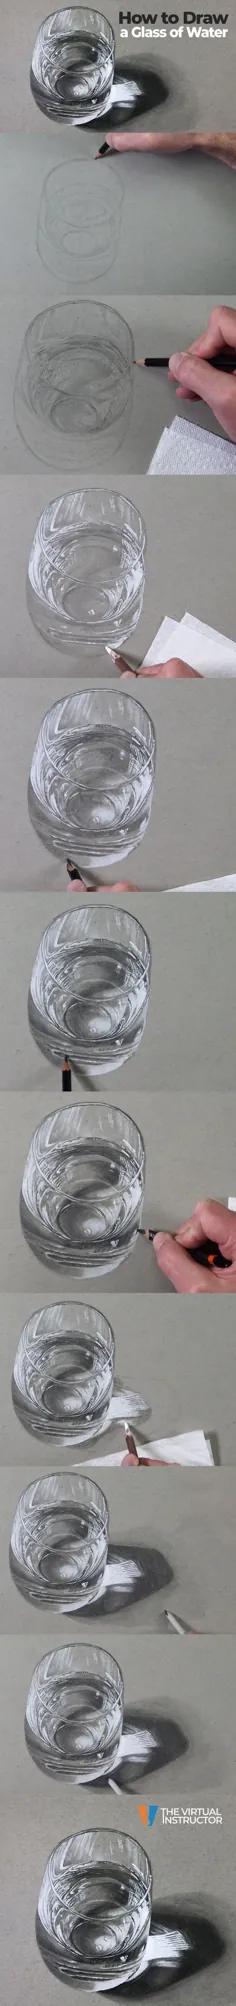 چگونه یک لیوان آب بکشیم